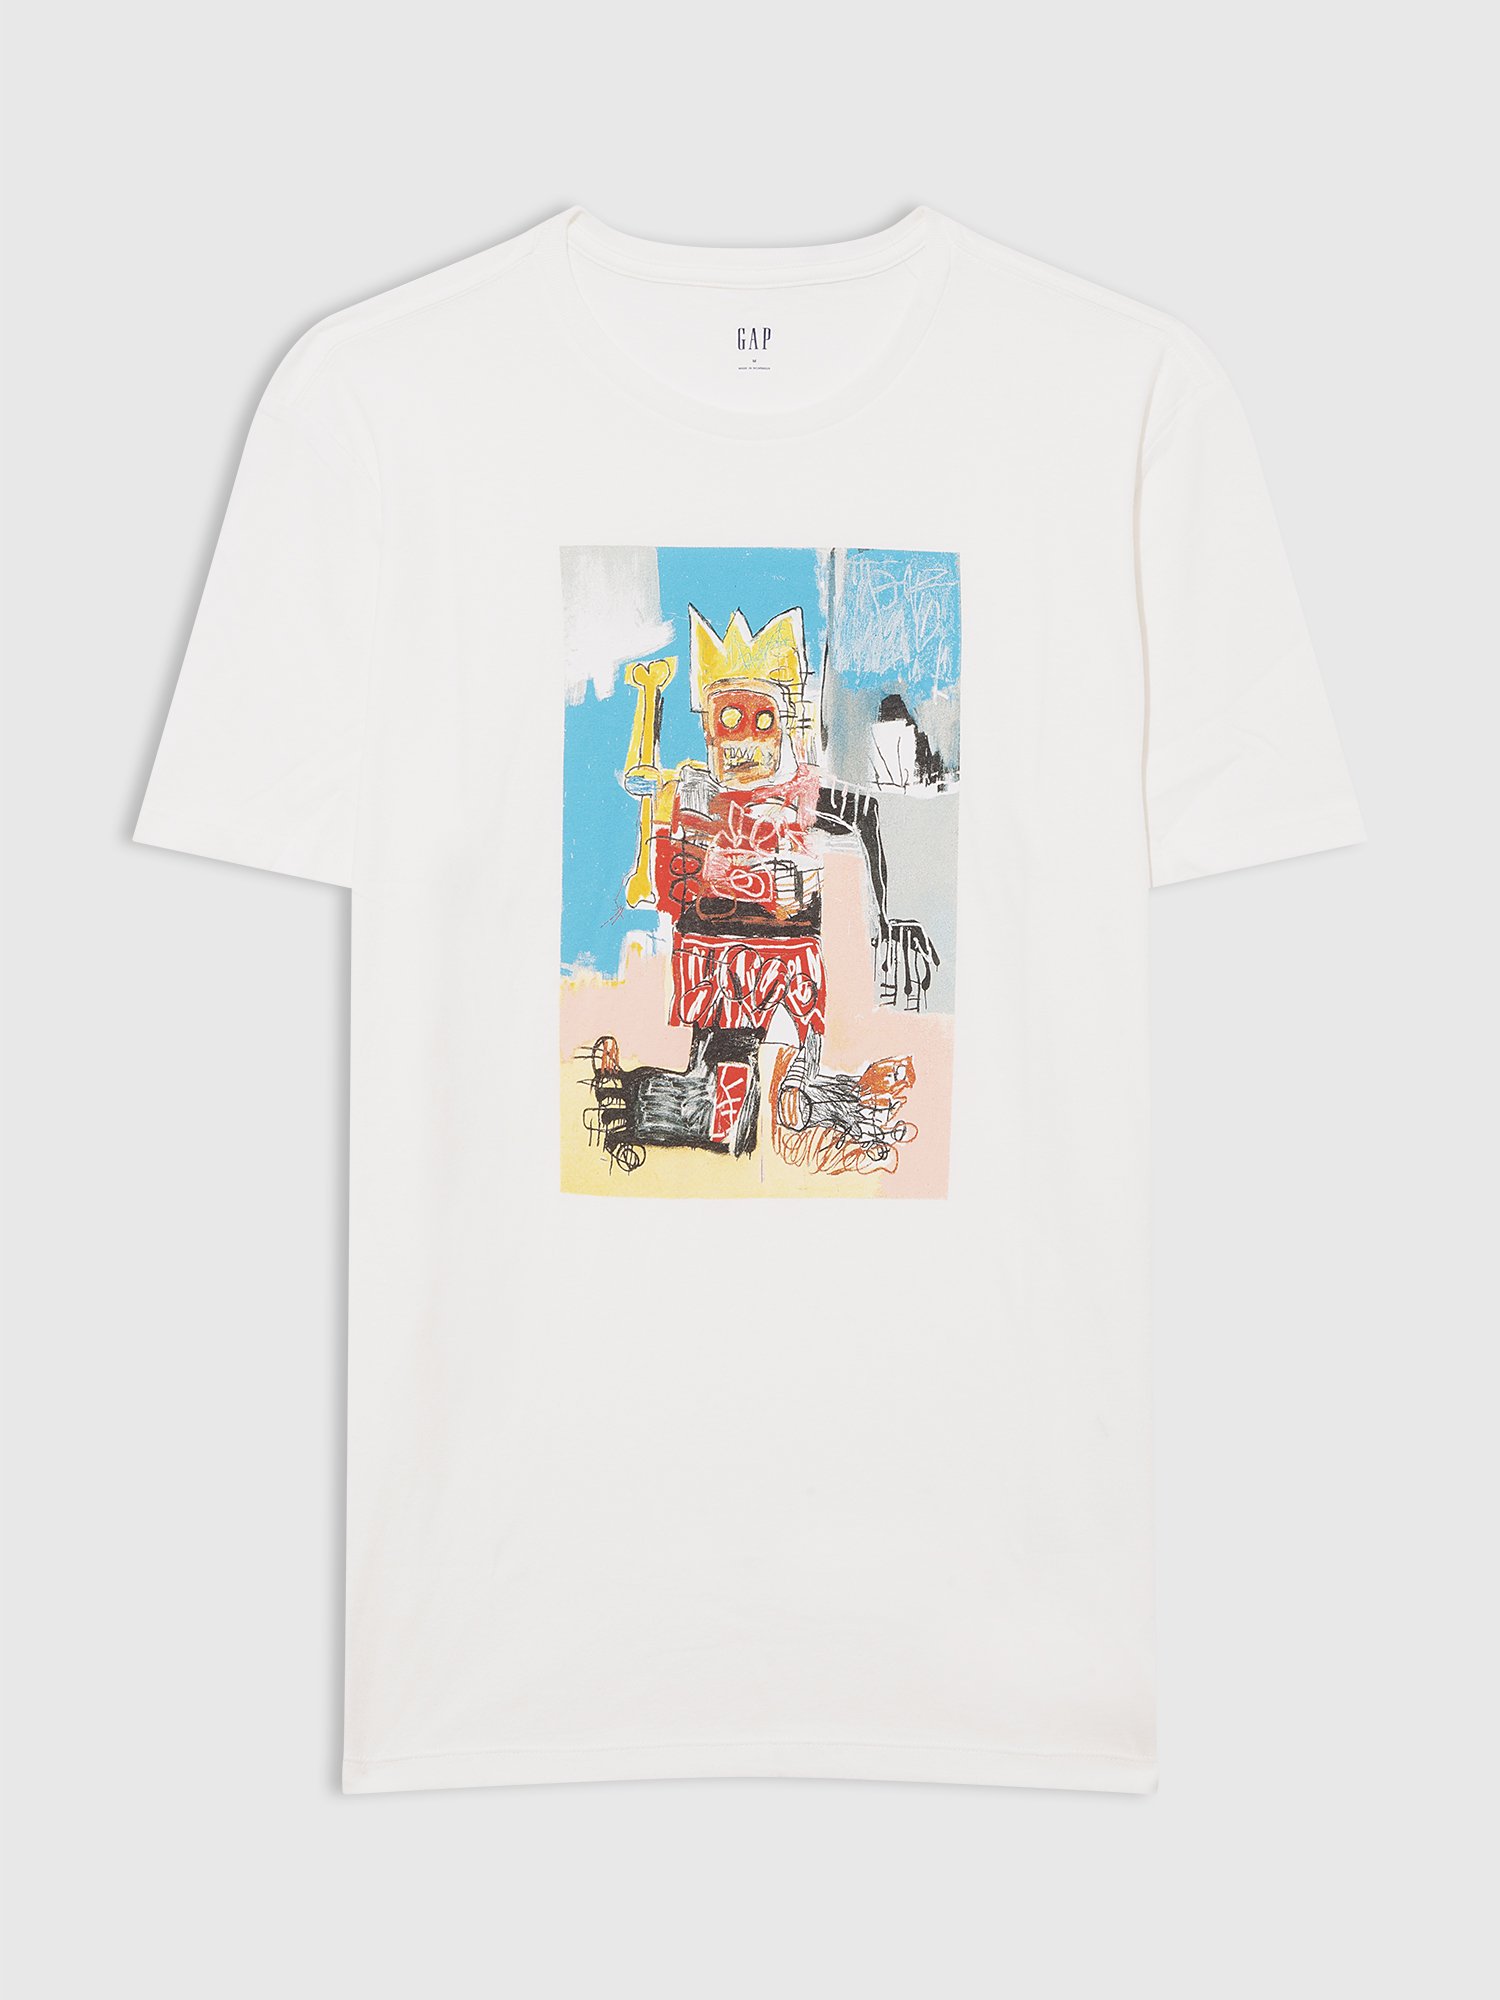 GAP X Jean-Michel Basquiat Grafik Baskılı T-Shirt product image